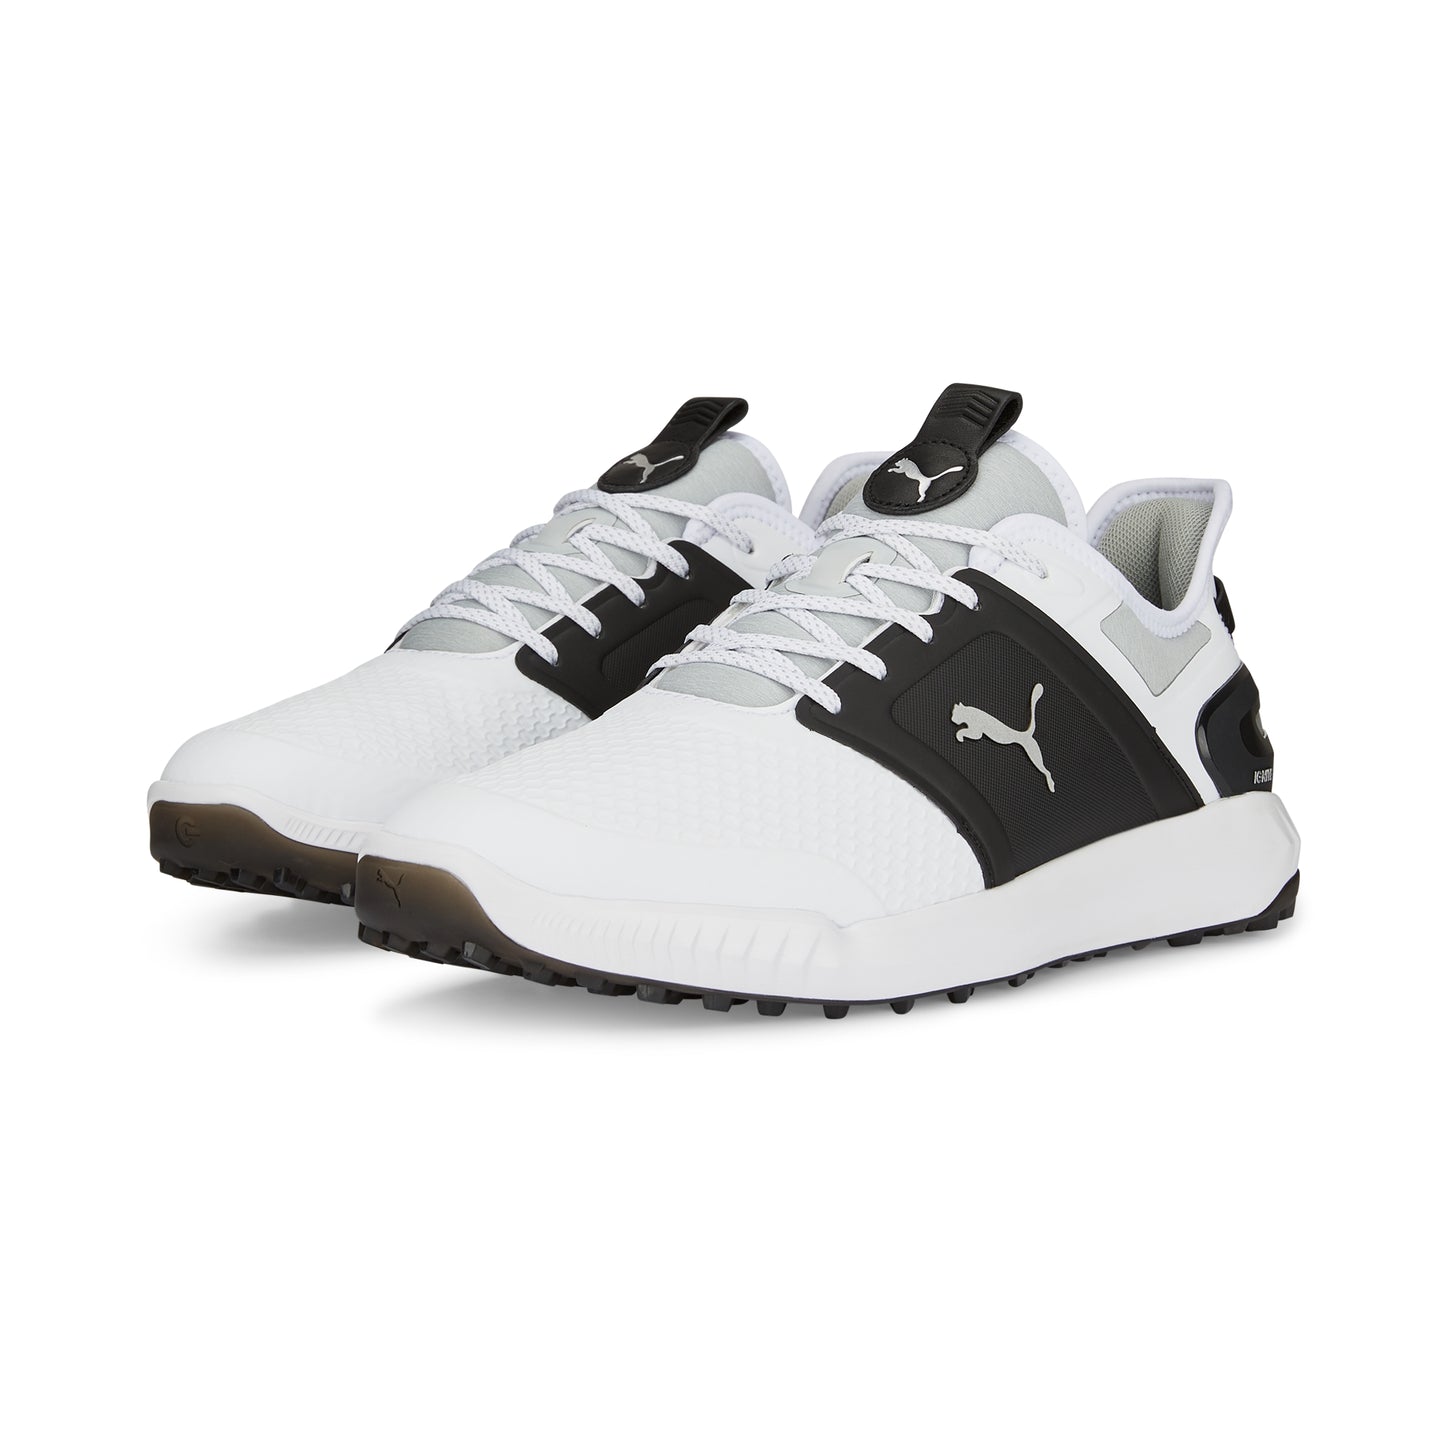 Puma Men's Ignite Elevate Wide Spikeless Golf Shoes - White/Black